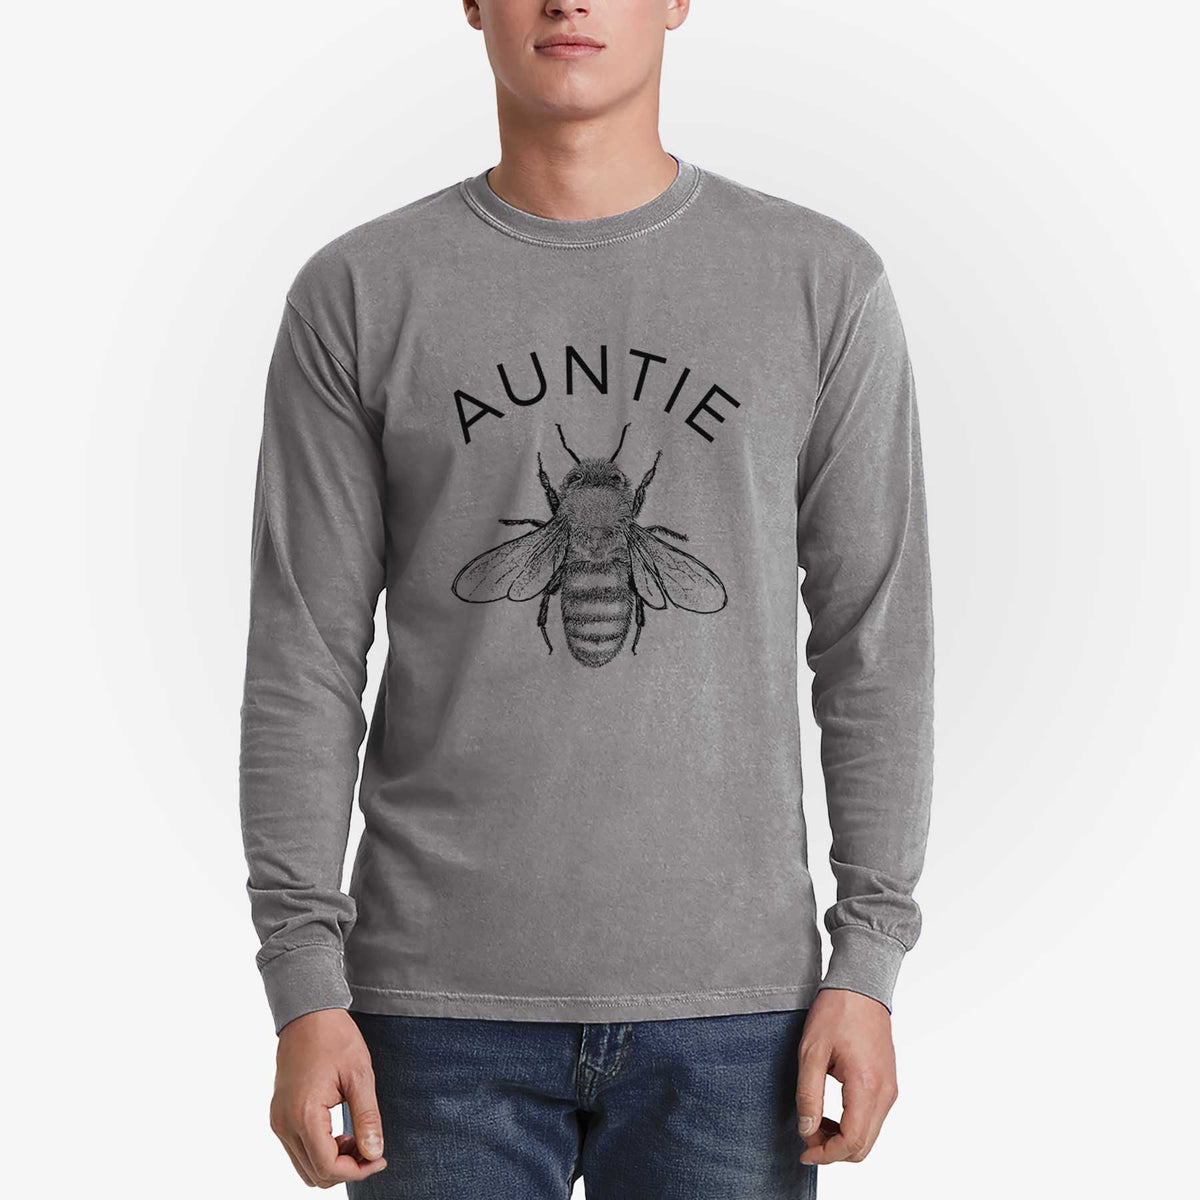 Auntie Bee - Heavyweight 100% Cotton Long Sleeve